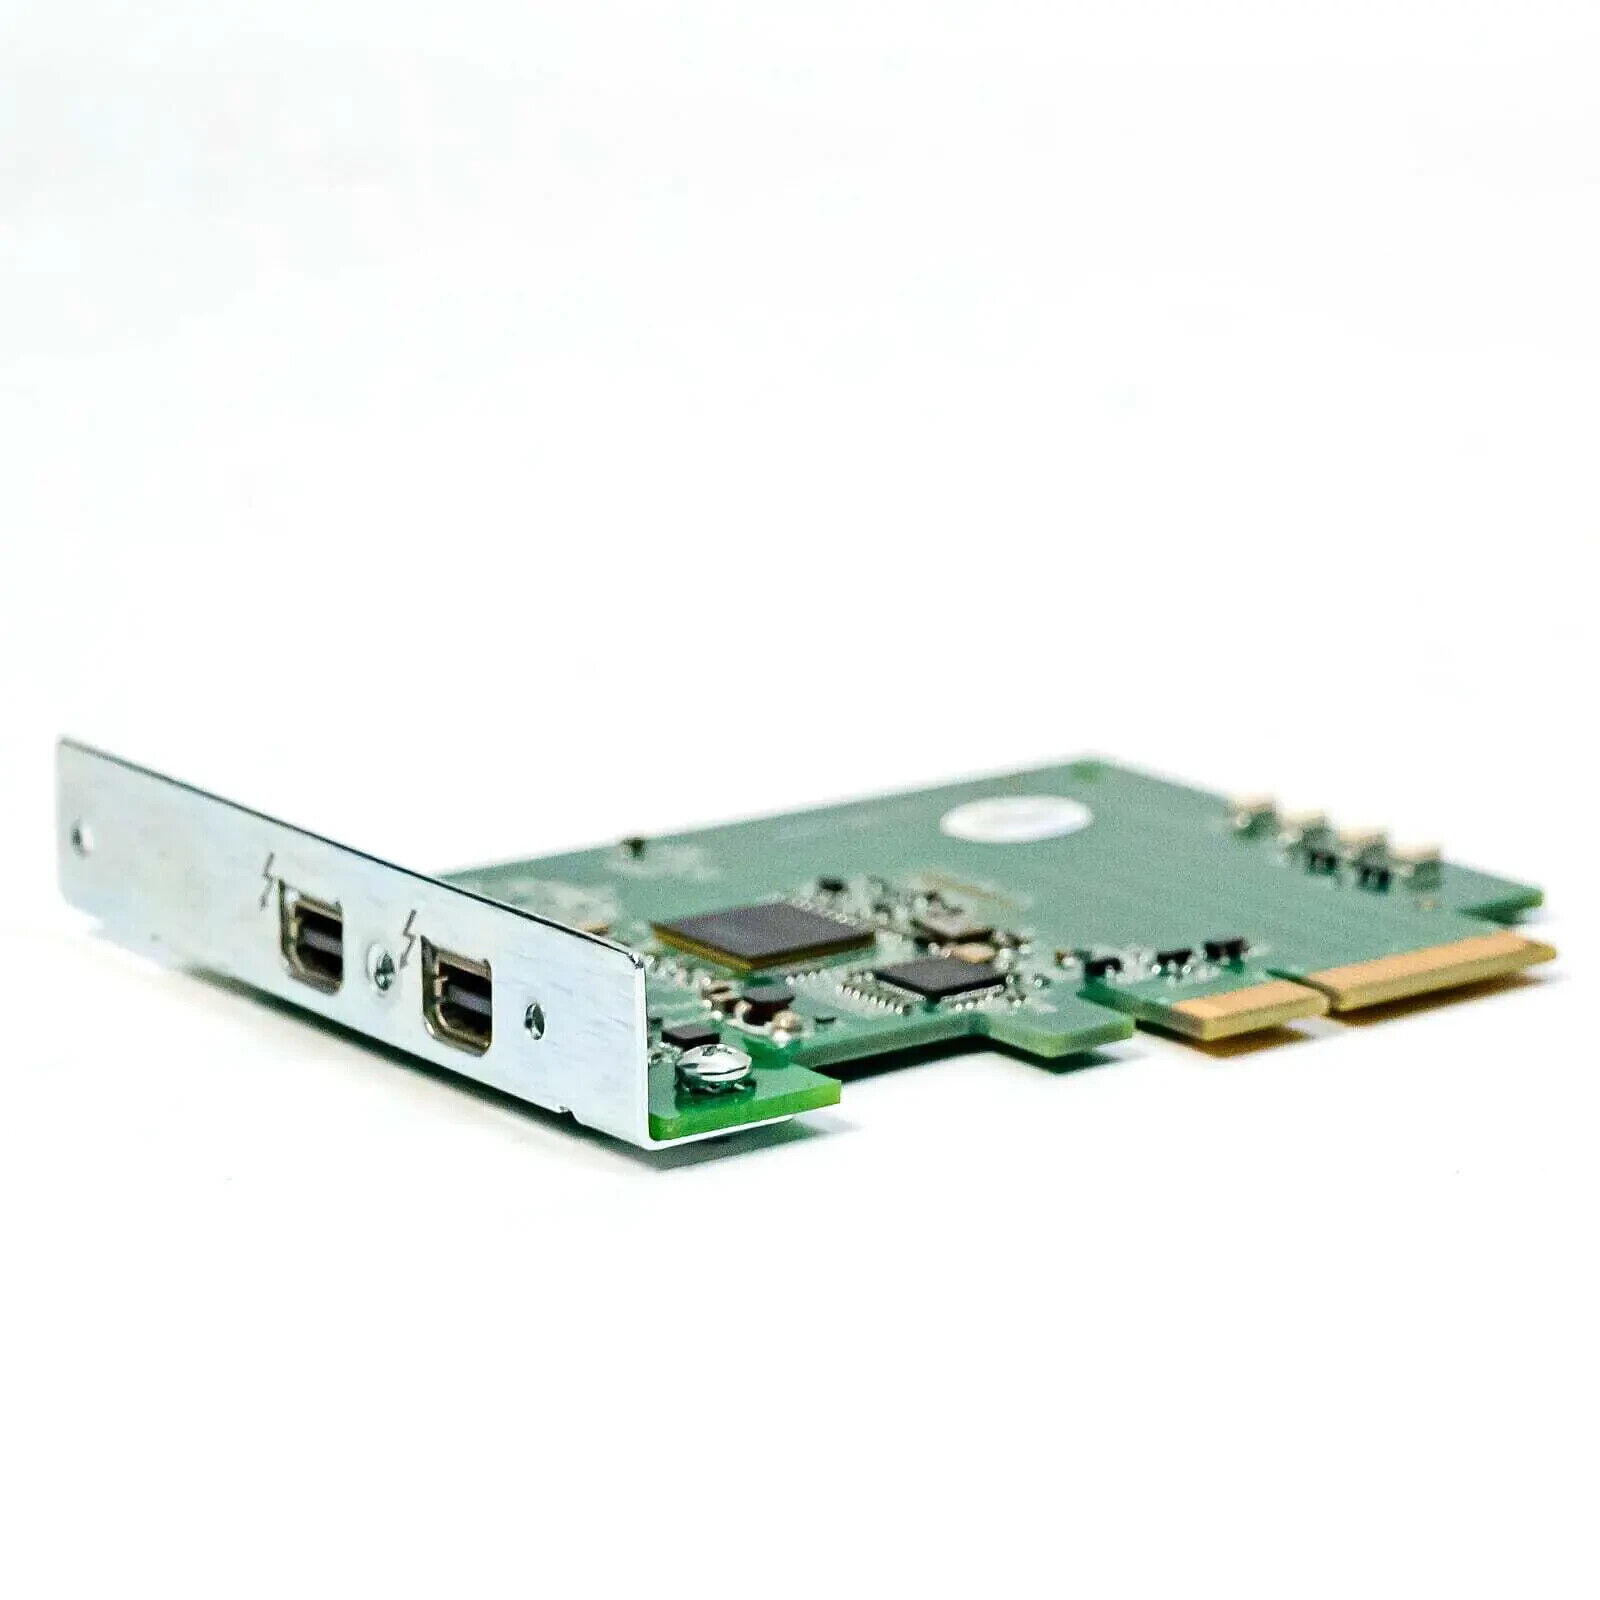 PCB-CUBO-FR-X1A SONNET THUNDERBOLT 2 UPGRADE PCI-E CARD